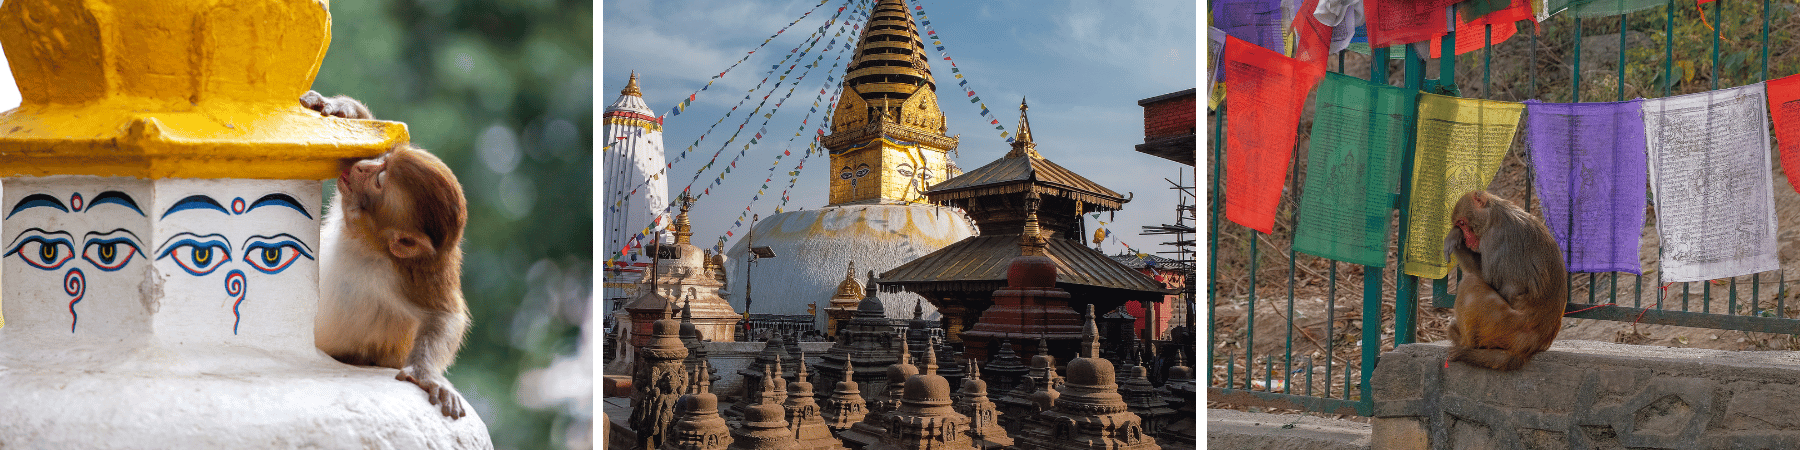 Monkey Temple (Swayambhunath, Kathmandu)